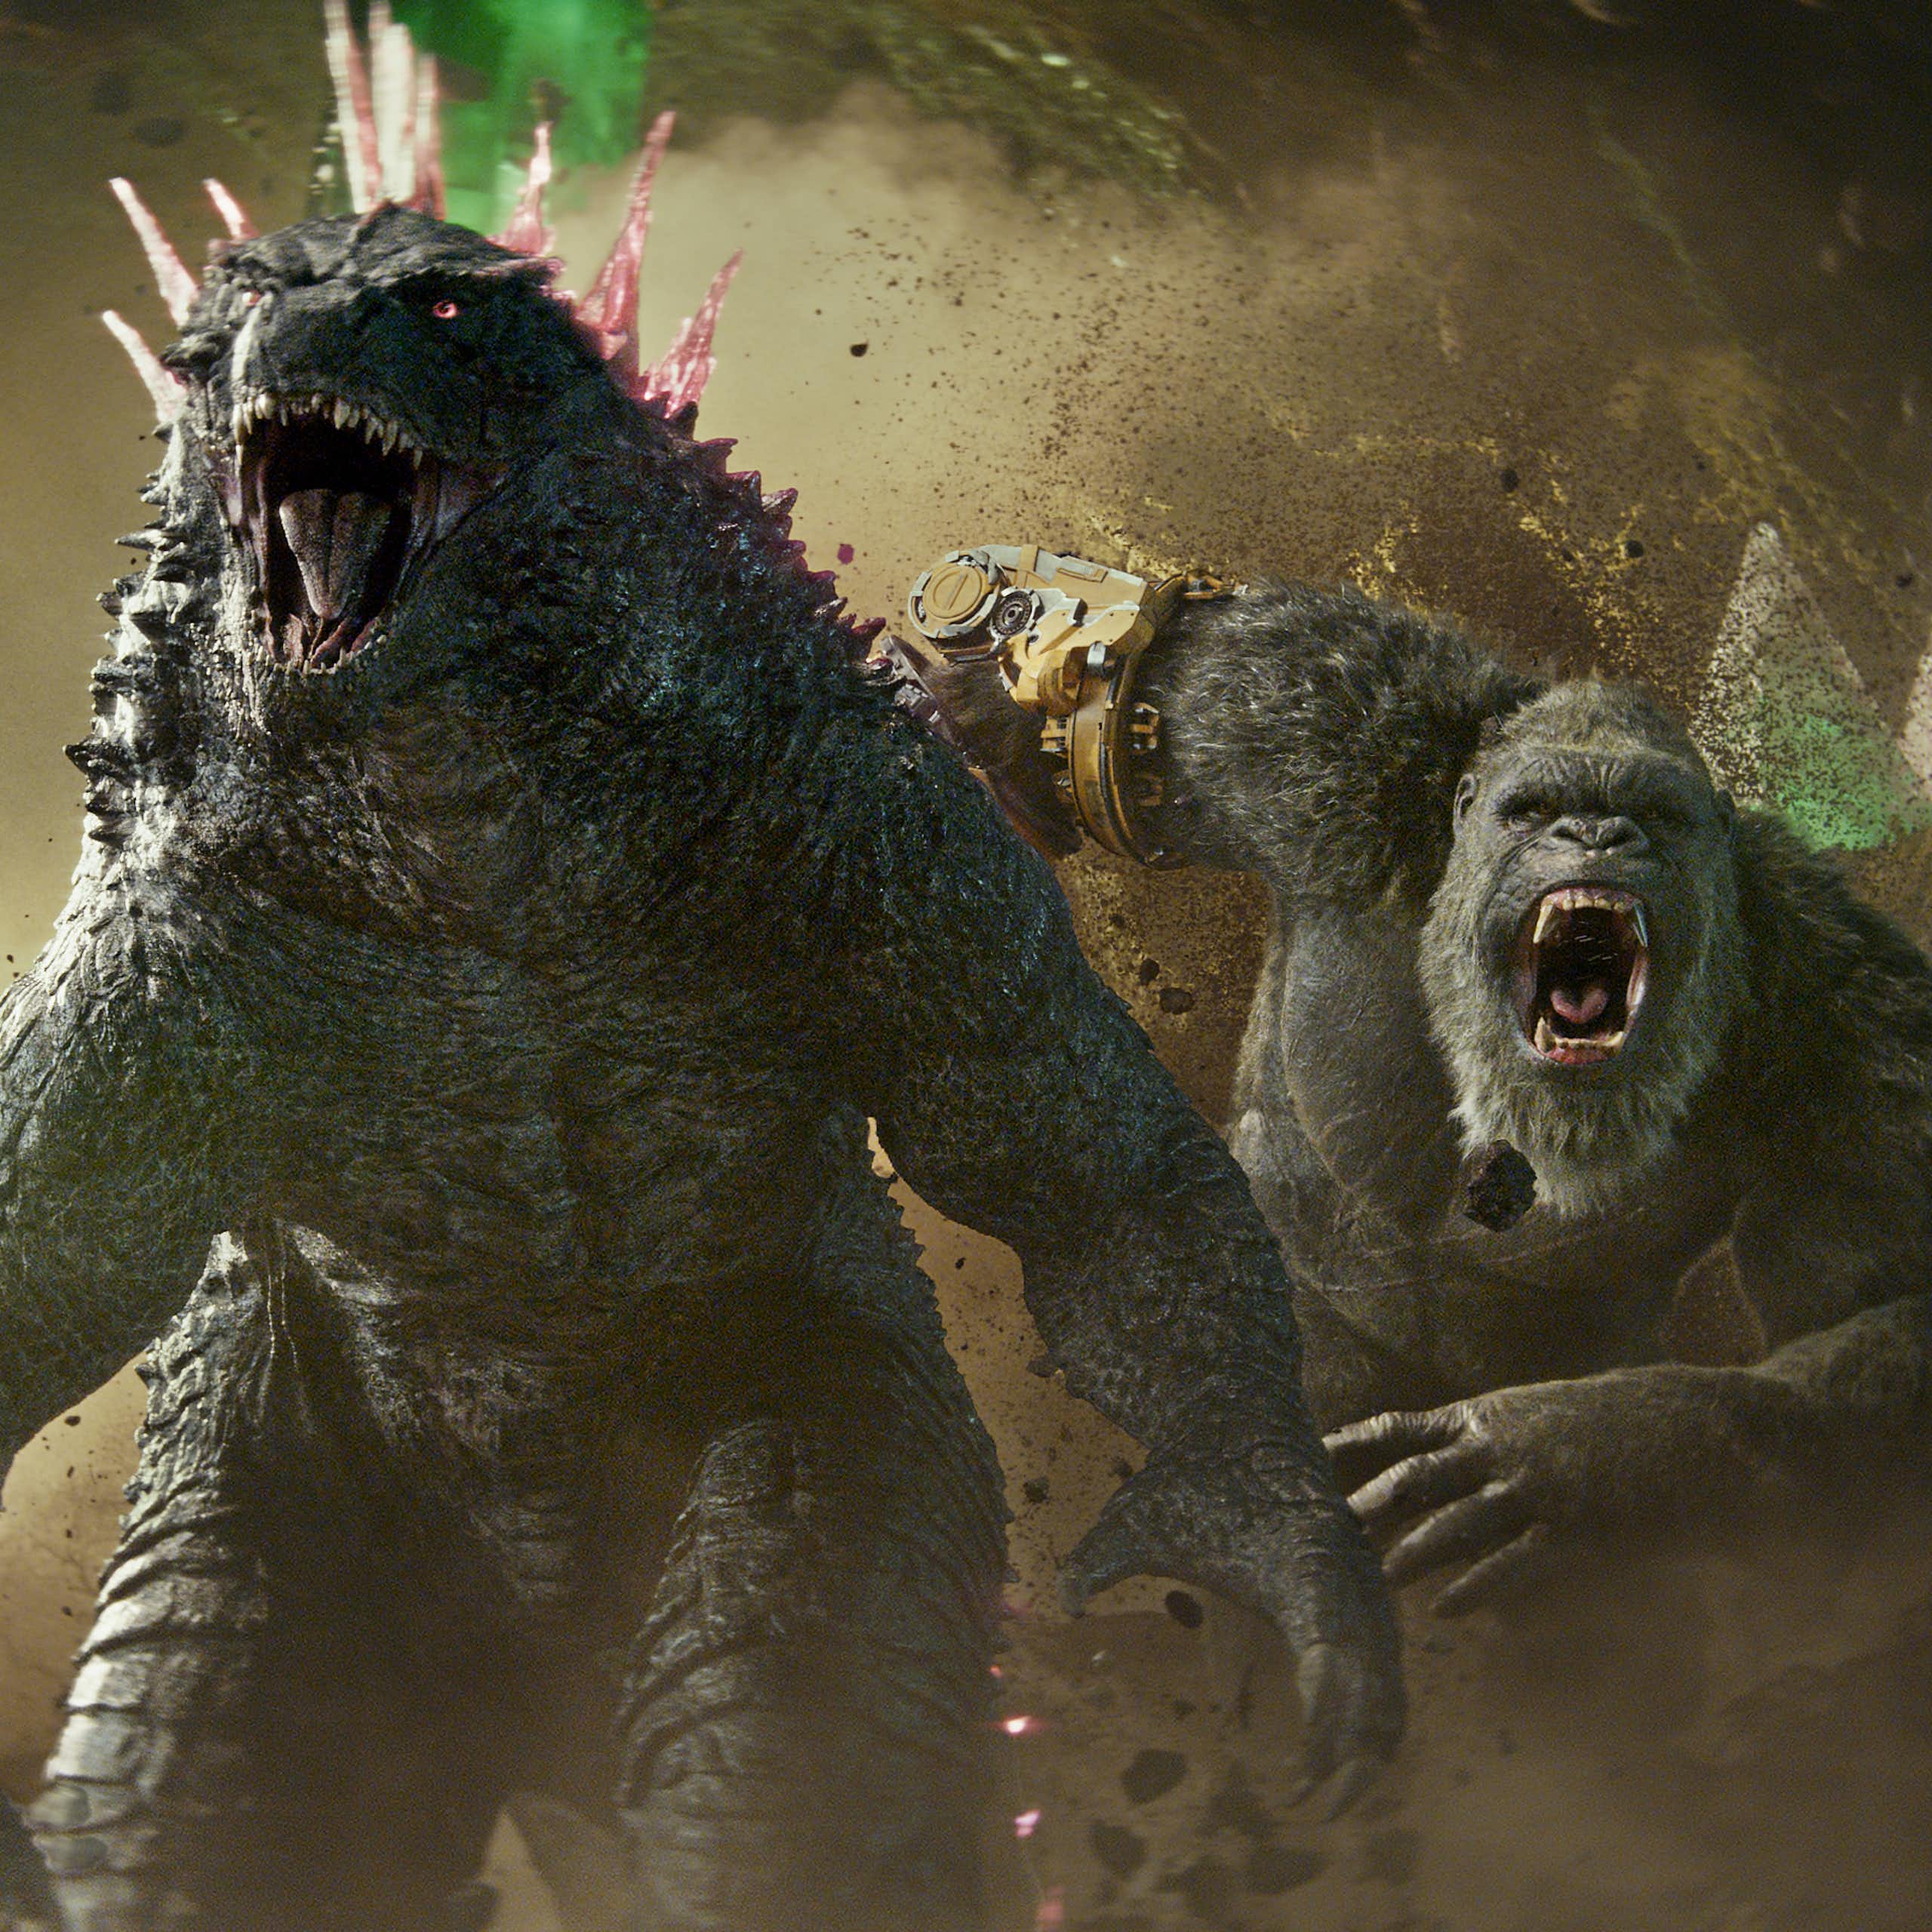 Godzilla and Kong running side by side